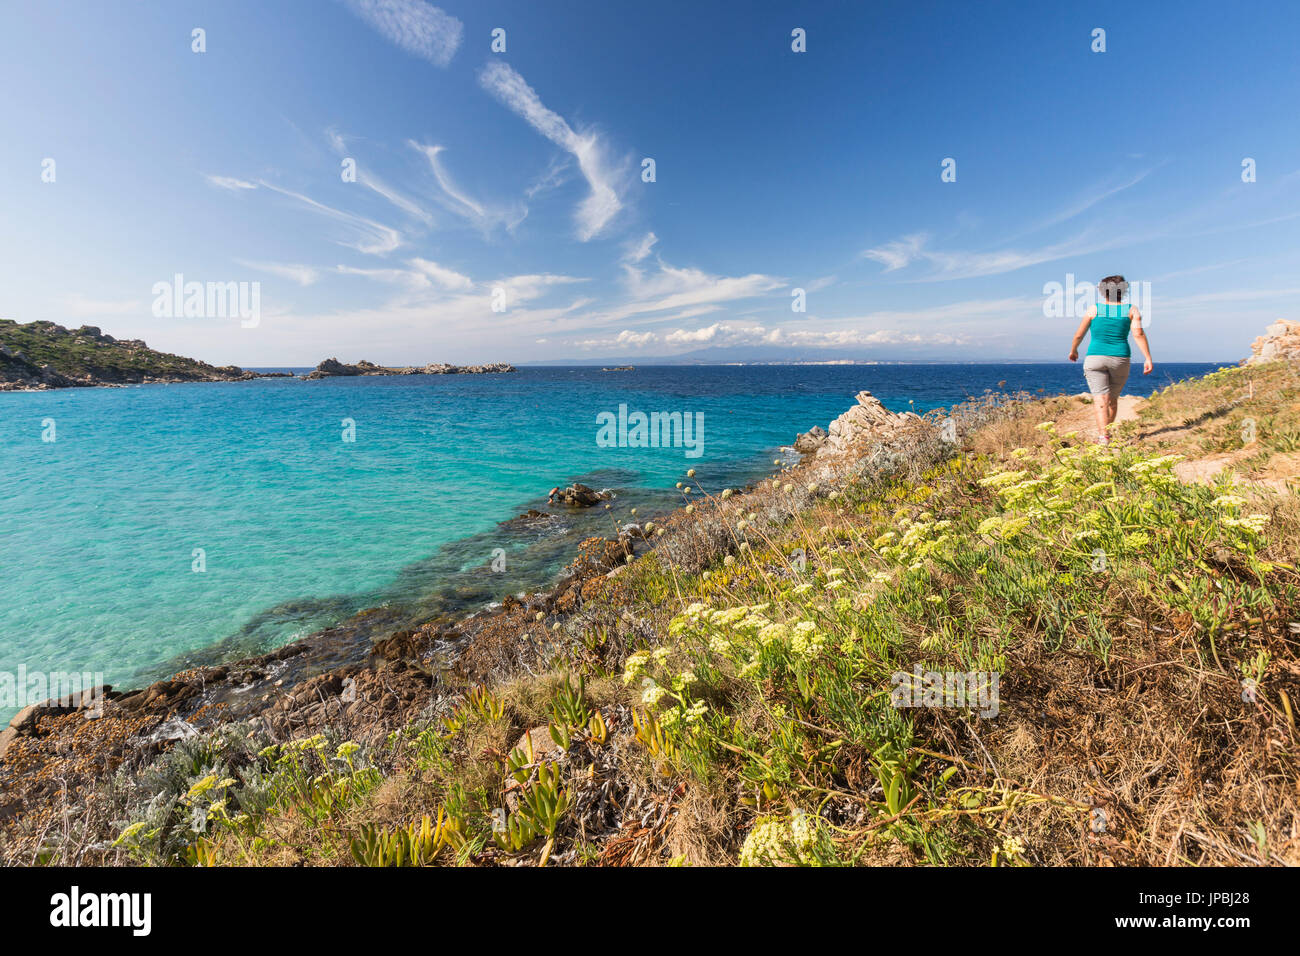 A walk on the path overlooking the turquoise sea Santa Teresa di Gallura Province of Sassari Sardinia Italy Europe Stock Photo